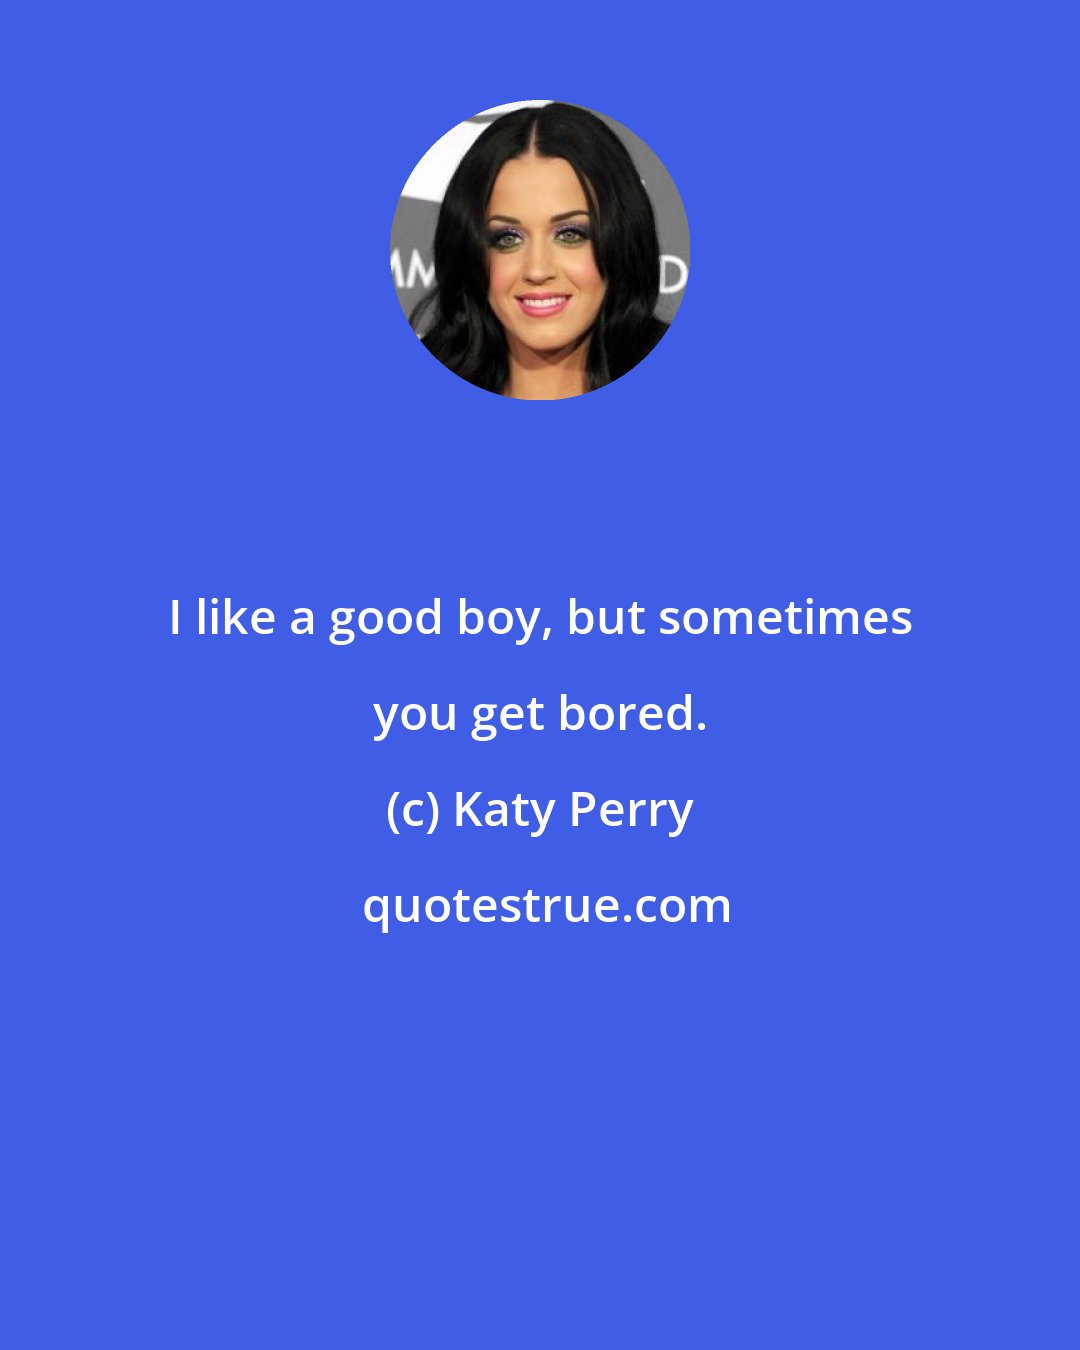 Katy Perry: I like a good boy, but sometimes you get bored.